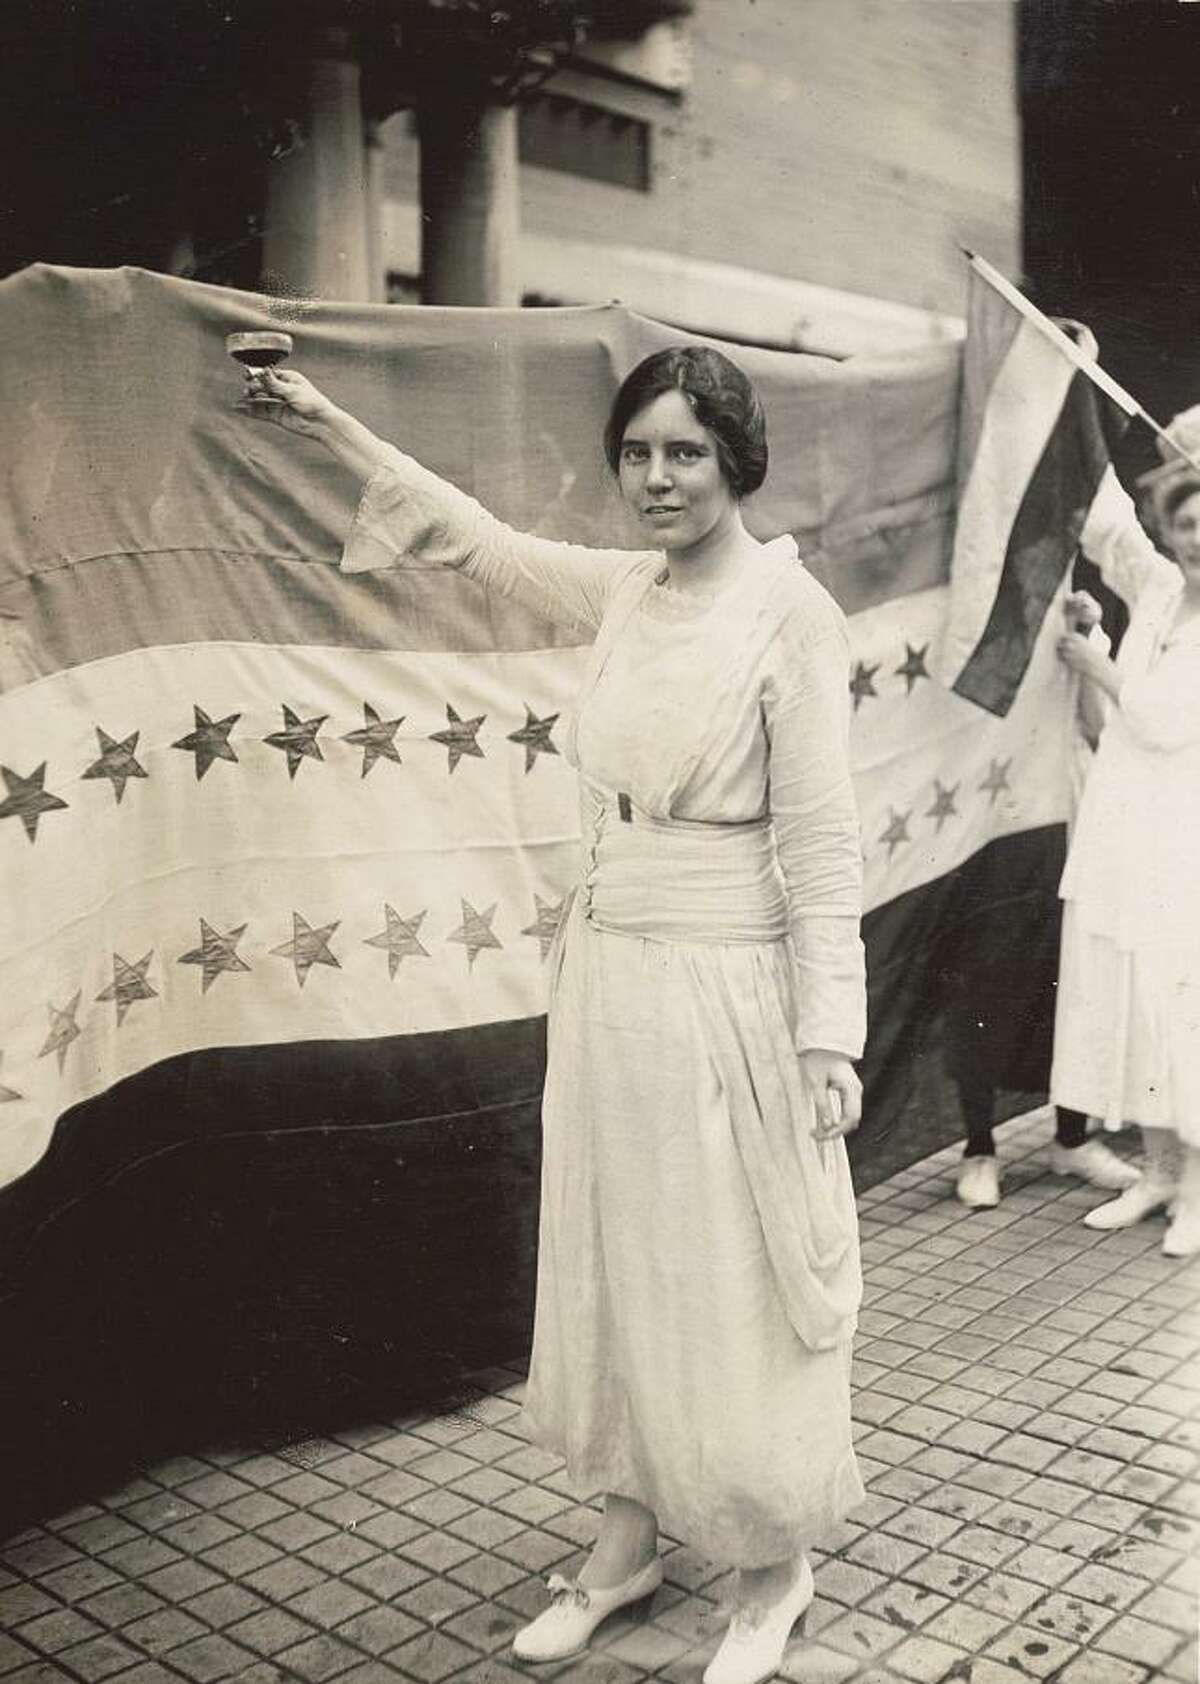 Suffragist Alice Paul in Washington, D.C., in August 1920.